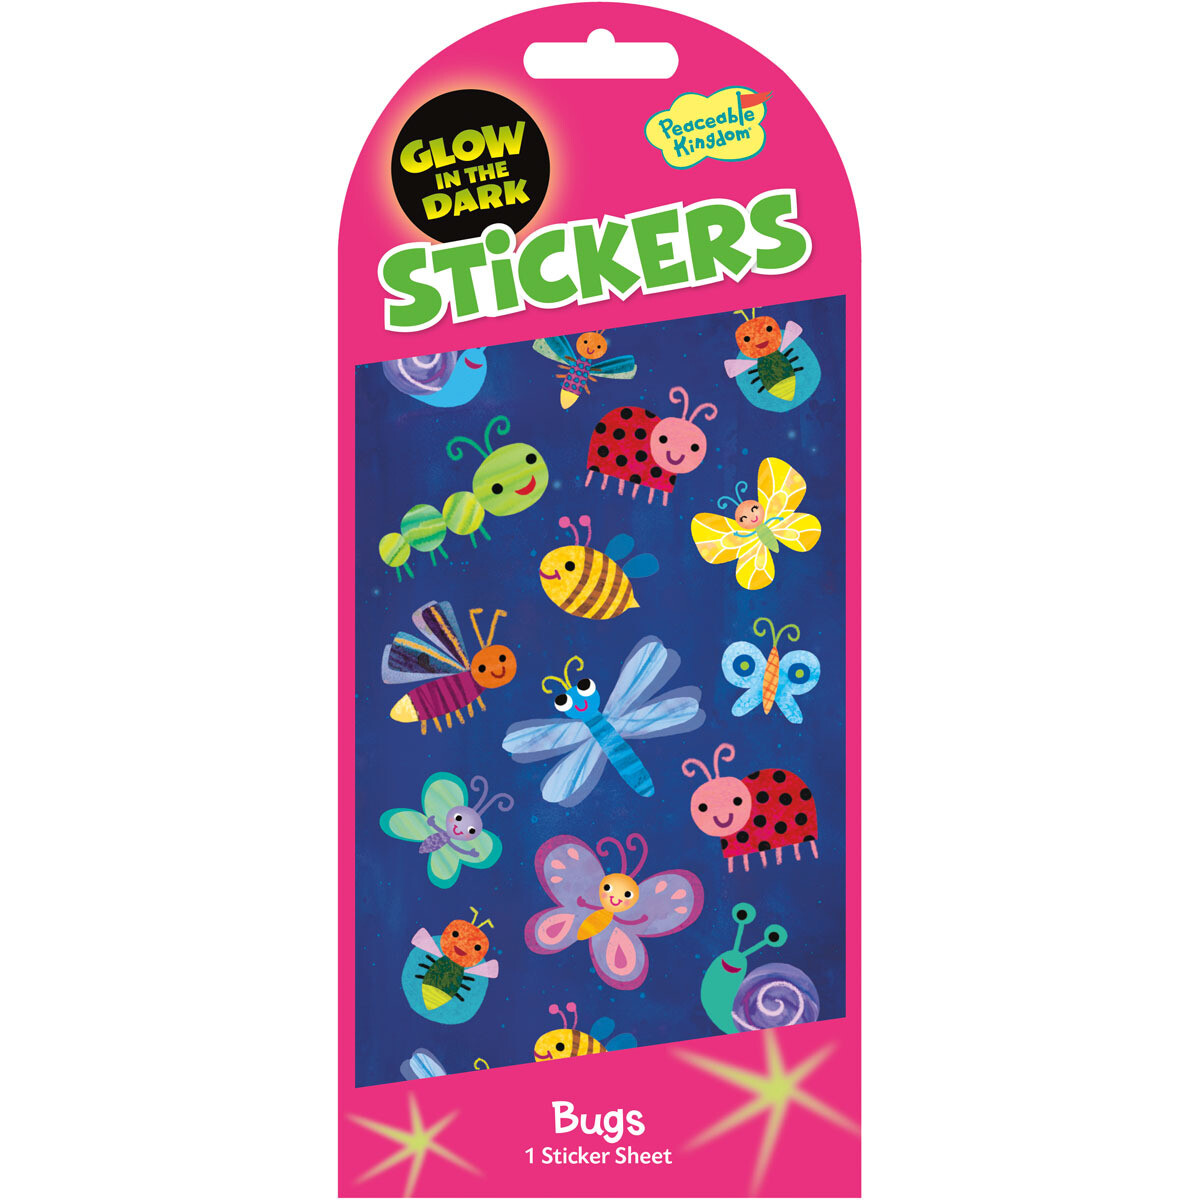 Bugs Glow in the Dark Stickers